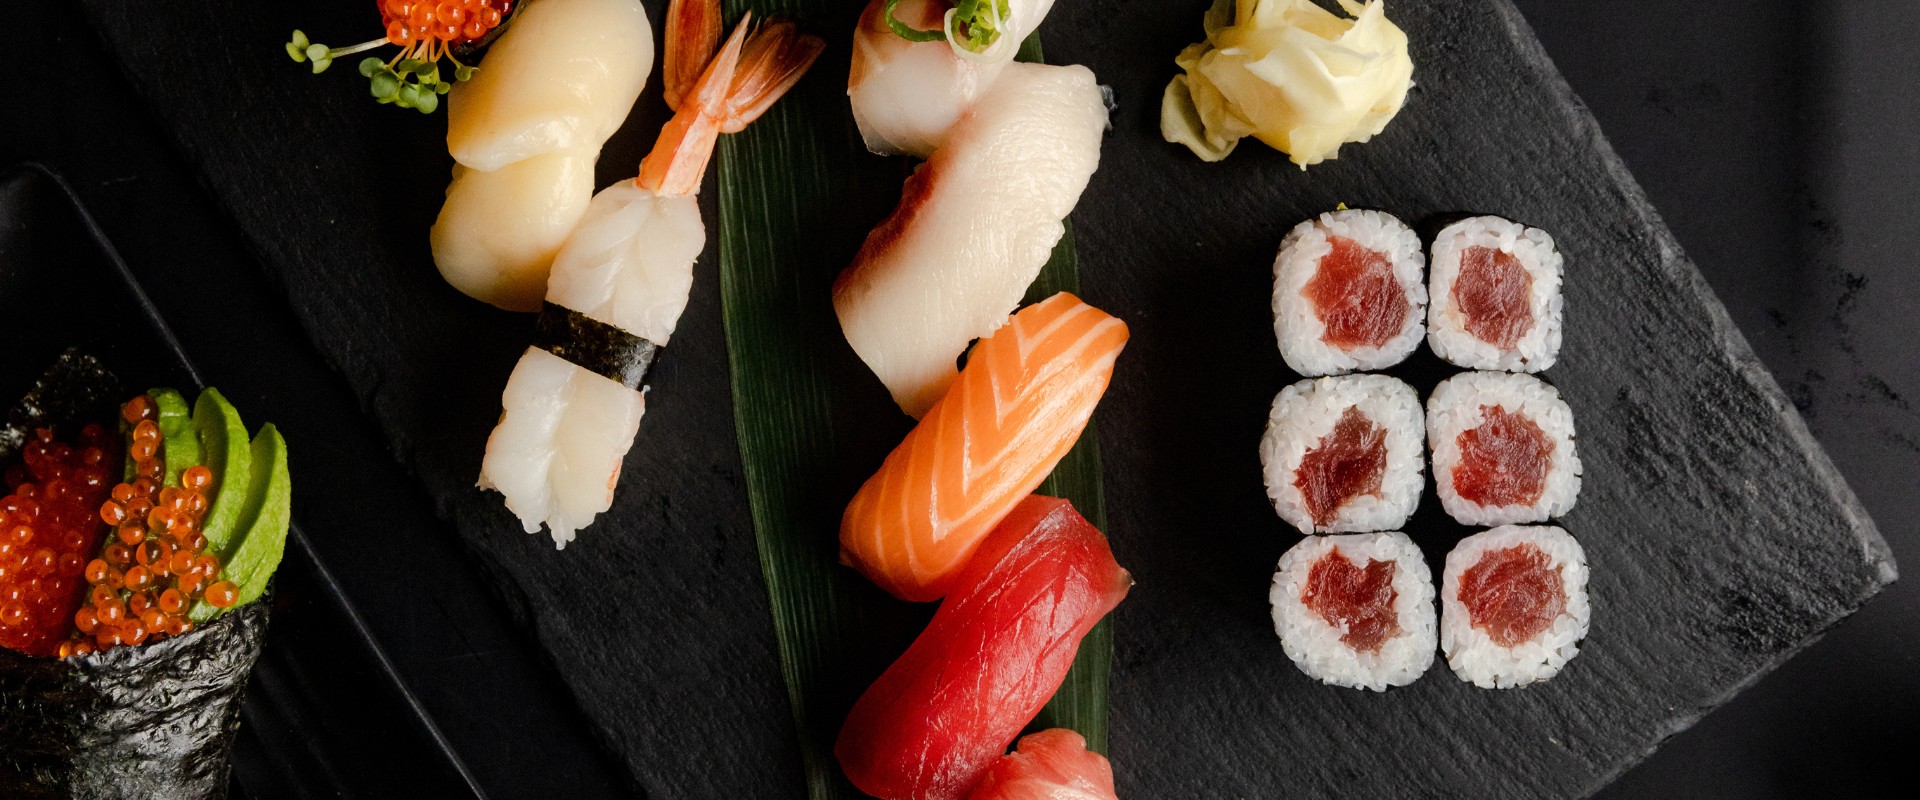 maido_sushi_content_creation